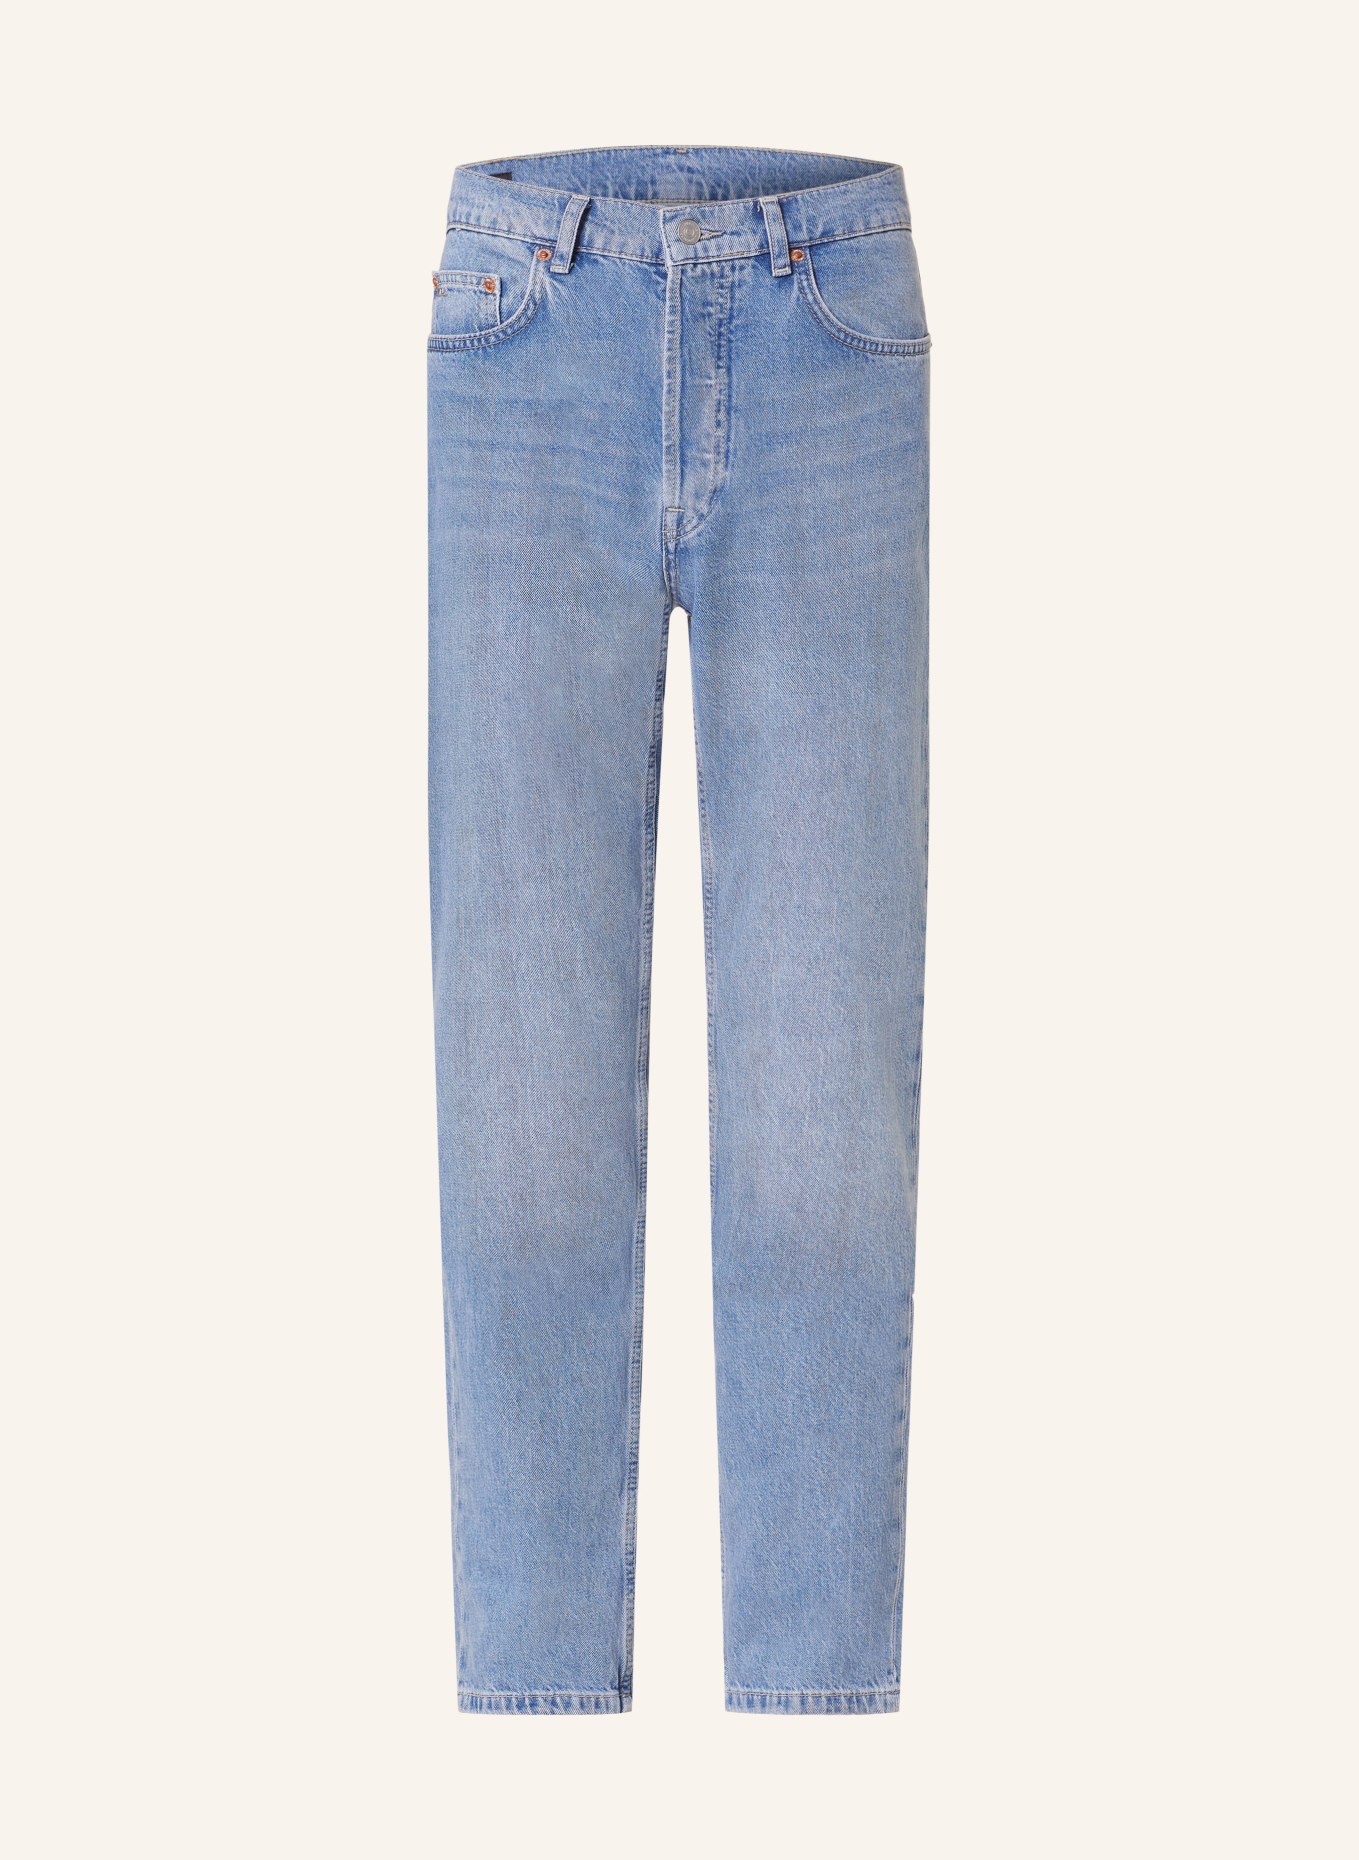 J.LINDEBERG Jeans CODY Regular Fit, Farbe: 6428 Light Blue (Bild 1)